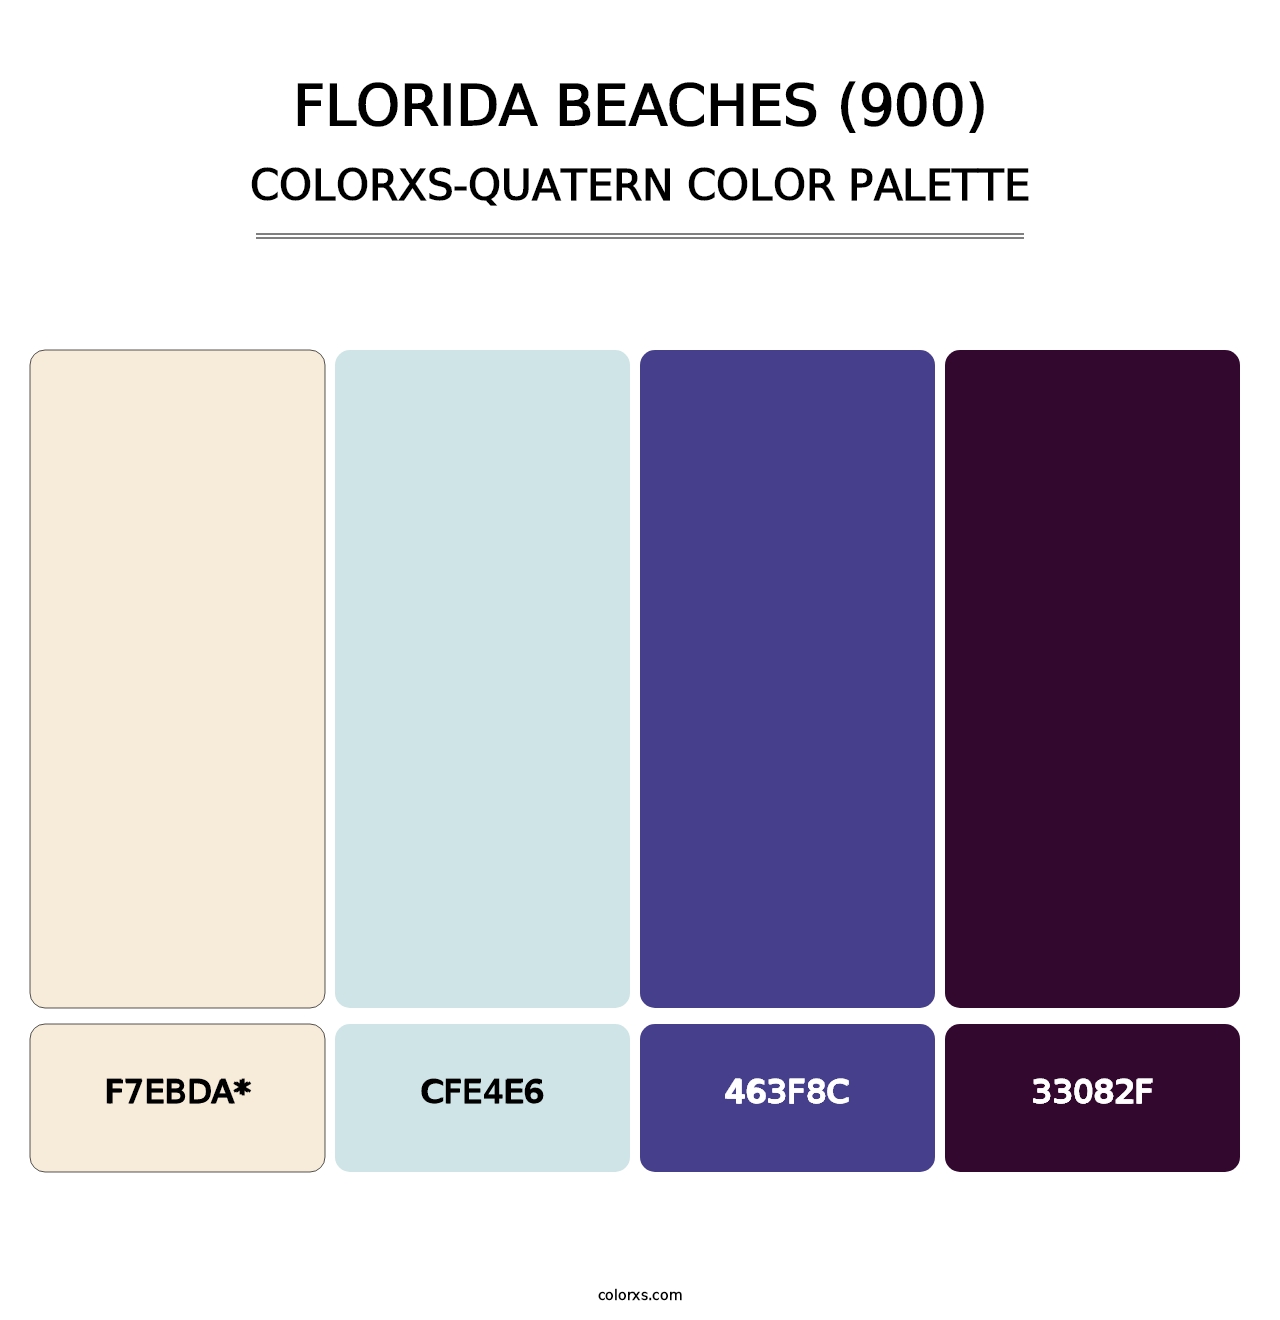 Florida Beaches (900) - Colorxs Quatern Palette